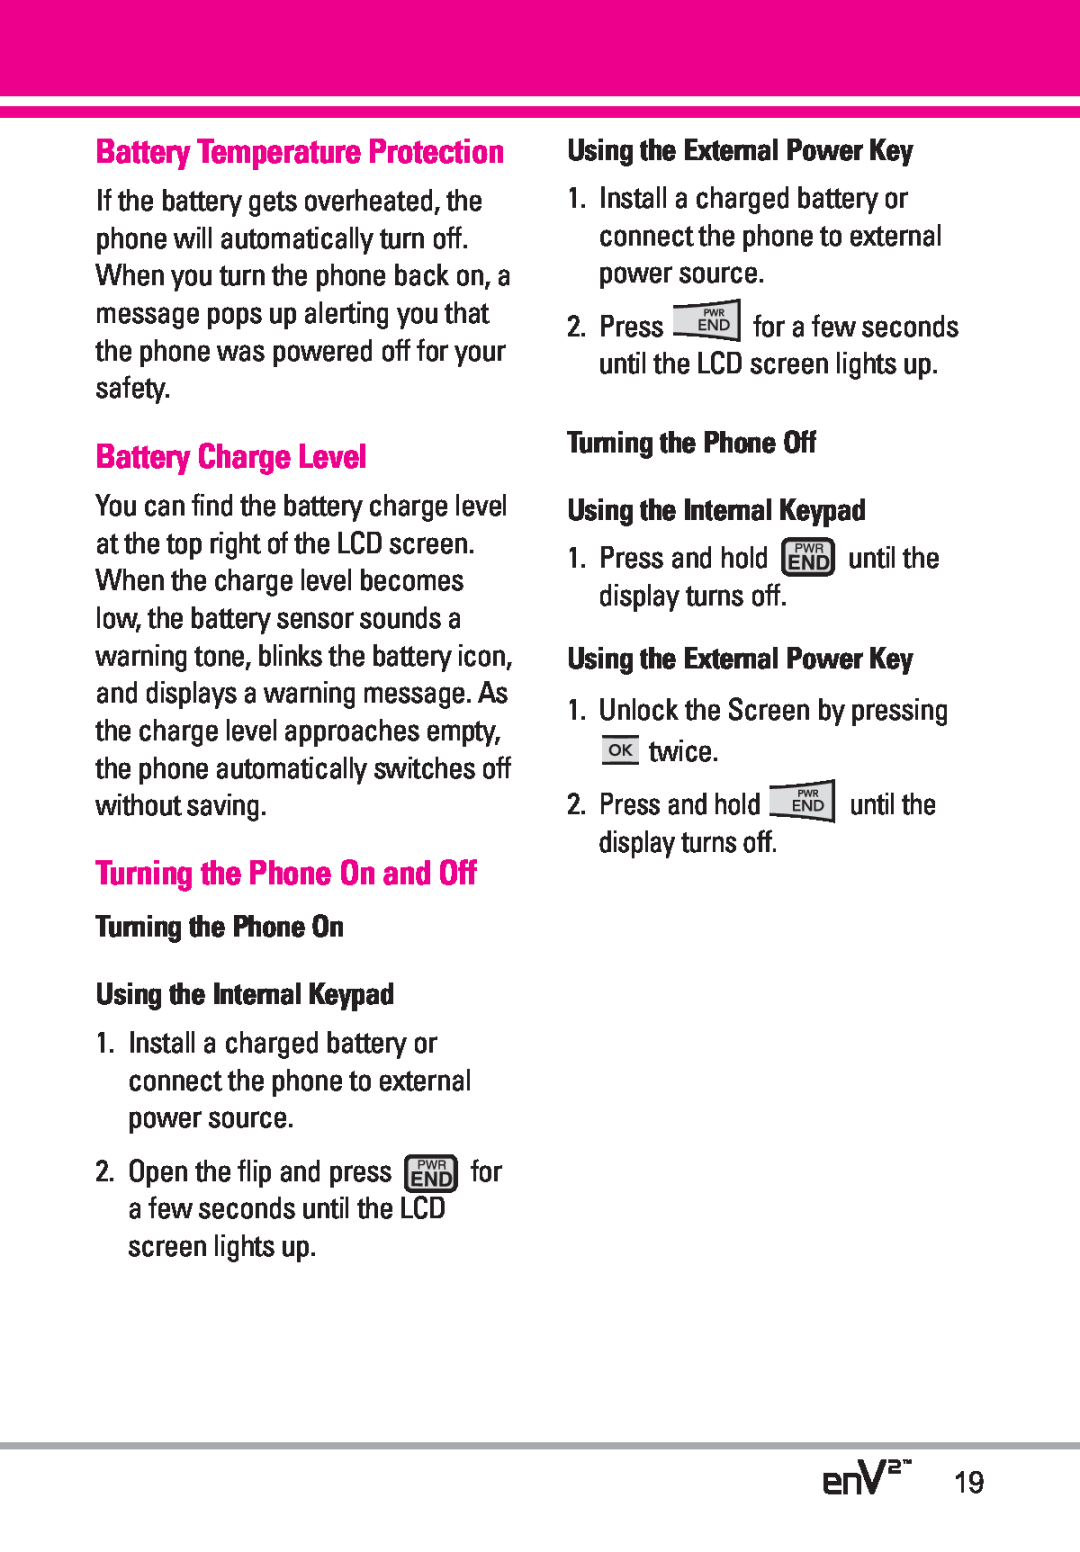 LG Electronics EnV2 Battery Charge Level, Turning the Phone On and Off, Turning the Phone On Using the Internal Keypad 